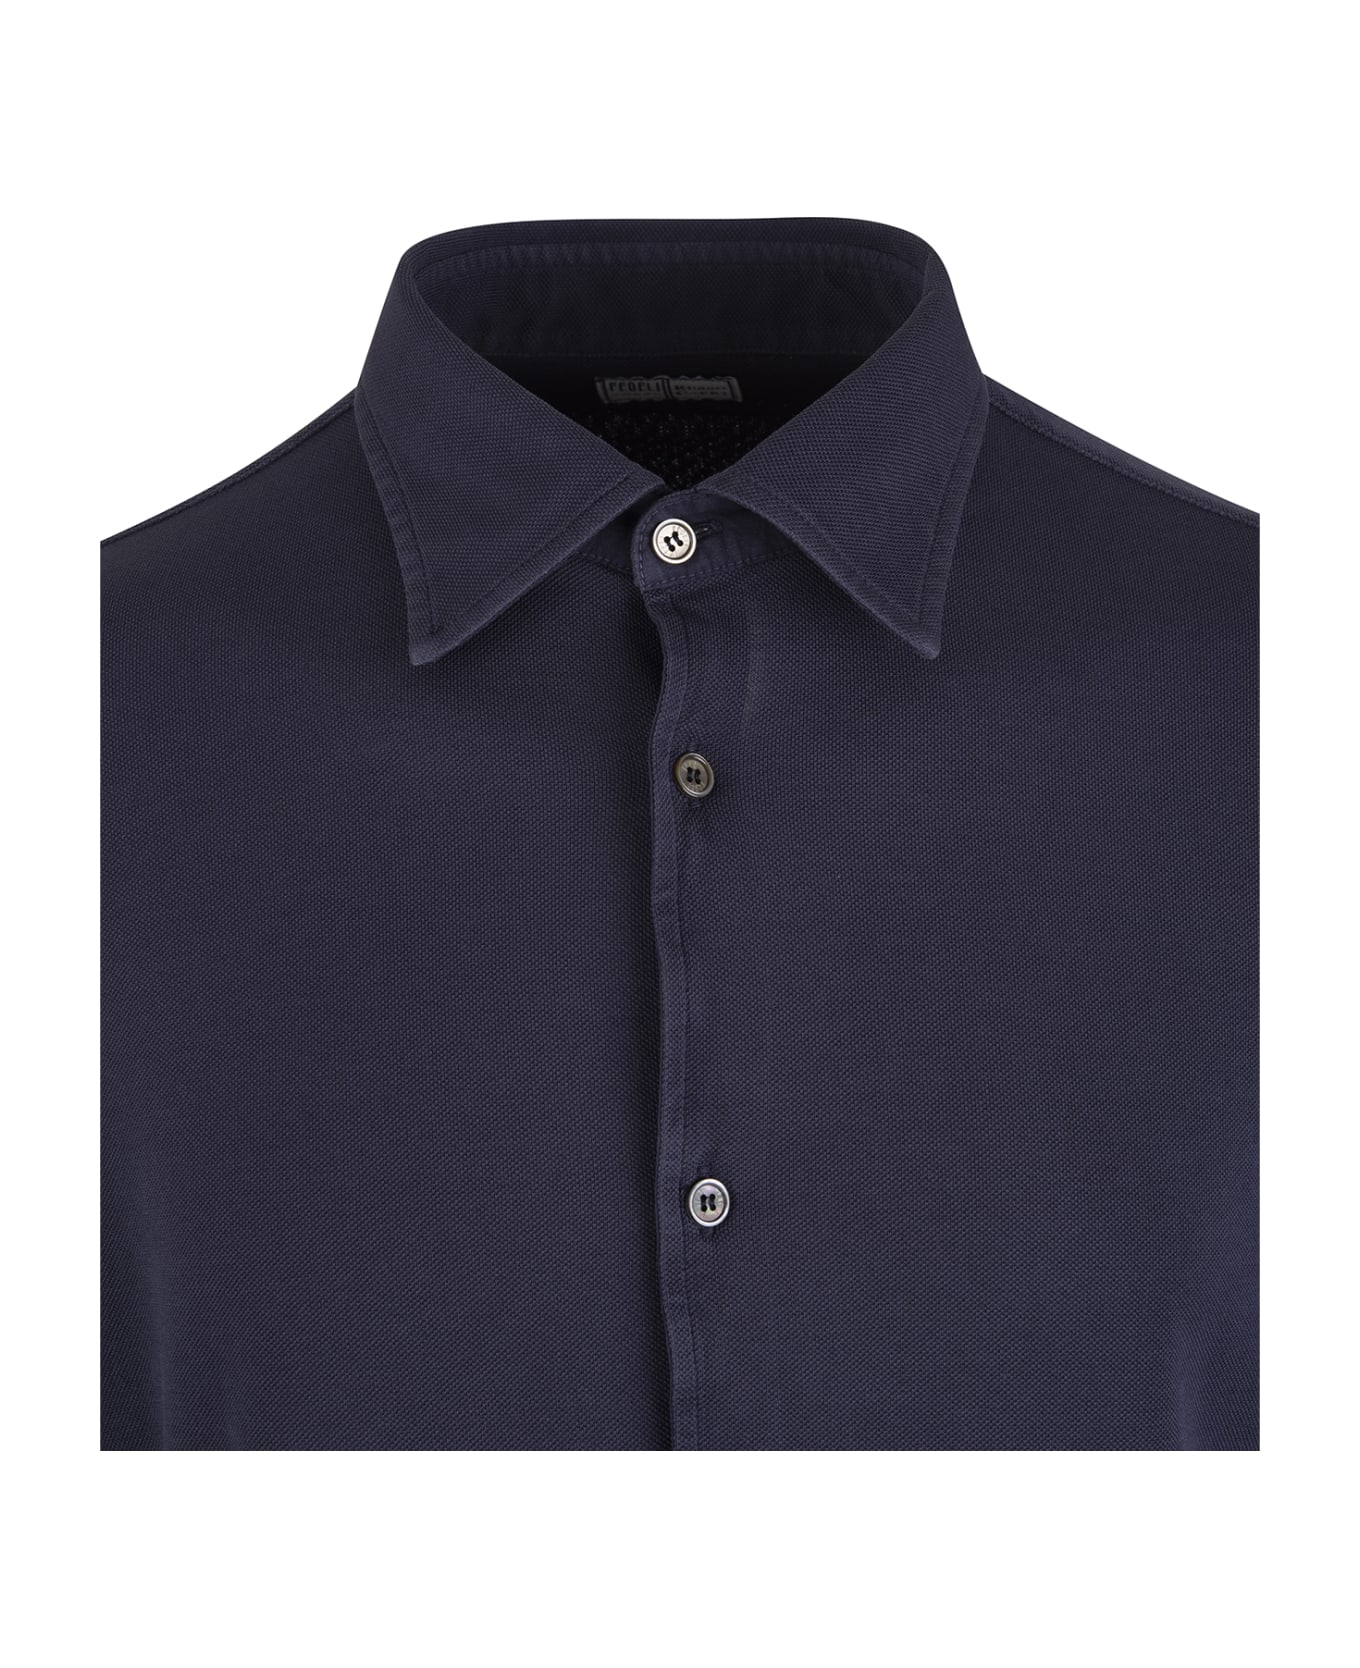 Fedeli Teorema Shirt In Navy Blue Cotton Piqué - Blue